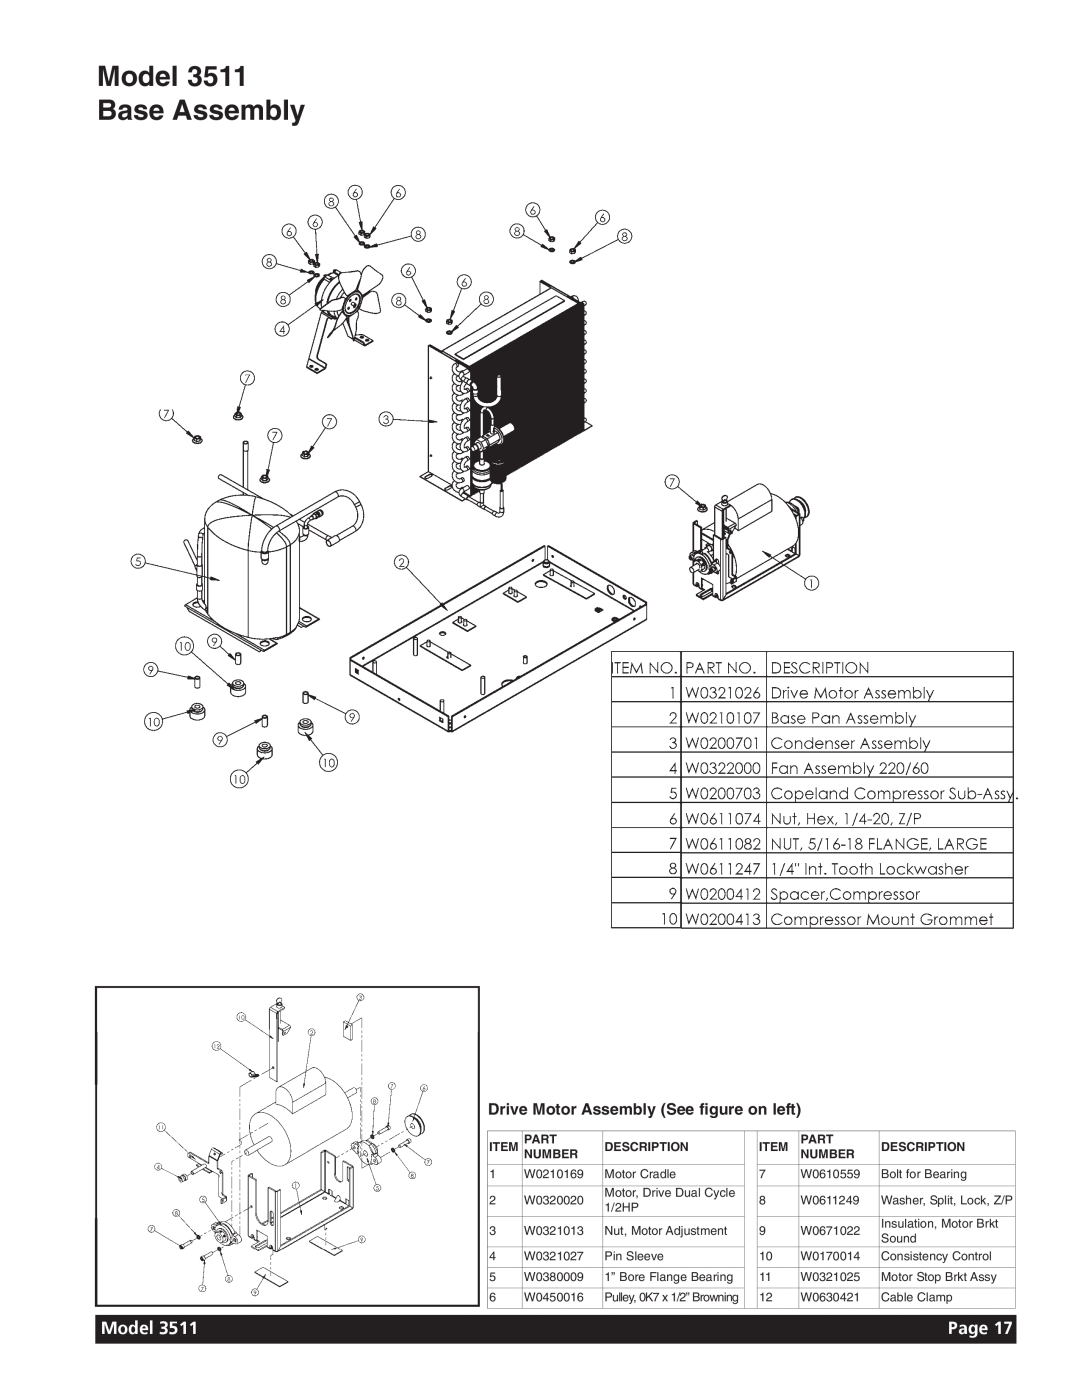 Grindmaster 3511 manual Model Base Assembly, Page, Drive Motor Assembly See figure on left, Part, Description, Number 